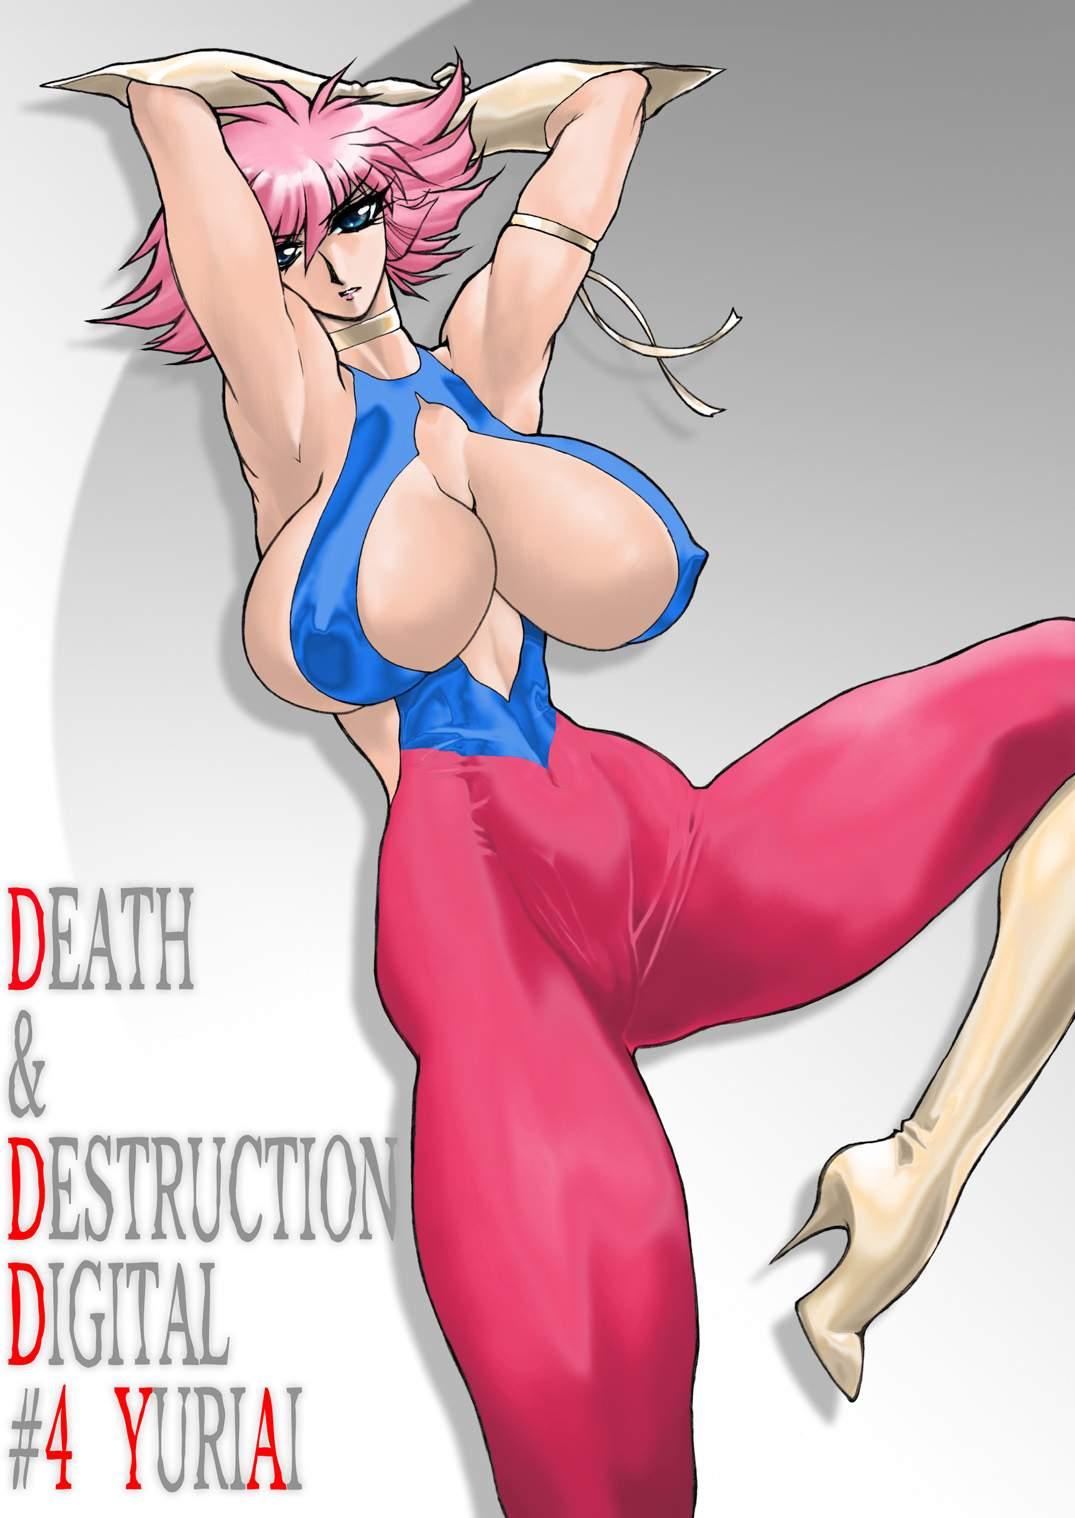 Death&Destruction Digital #4 0